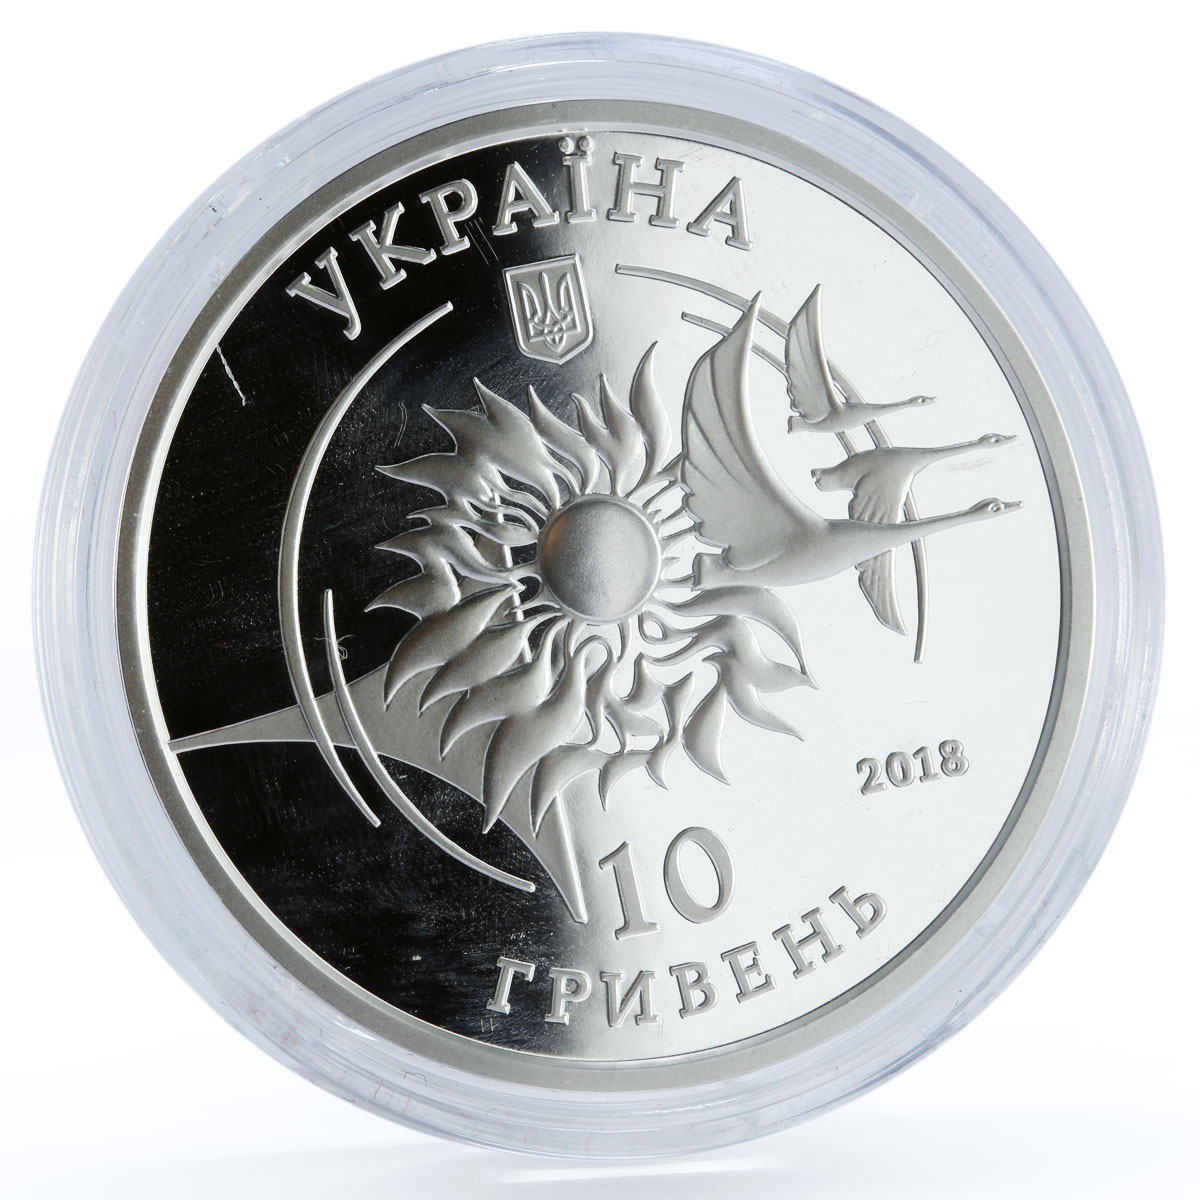 Ukraine 10 hryvnia AN-132 Plane Aviation Antonov silver proof coin 2018